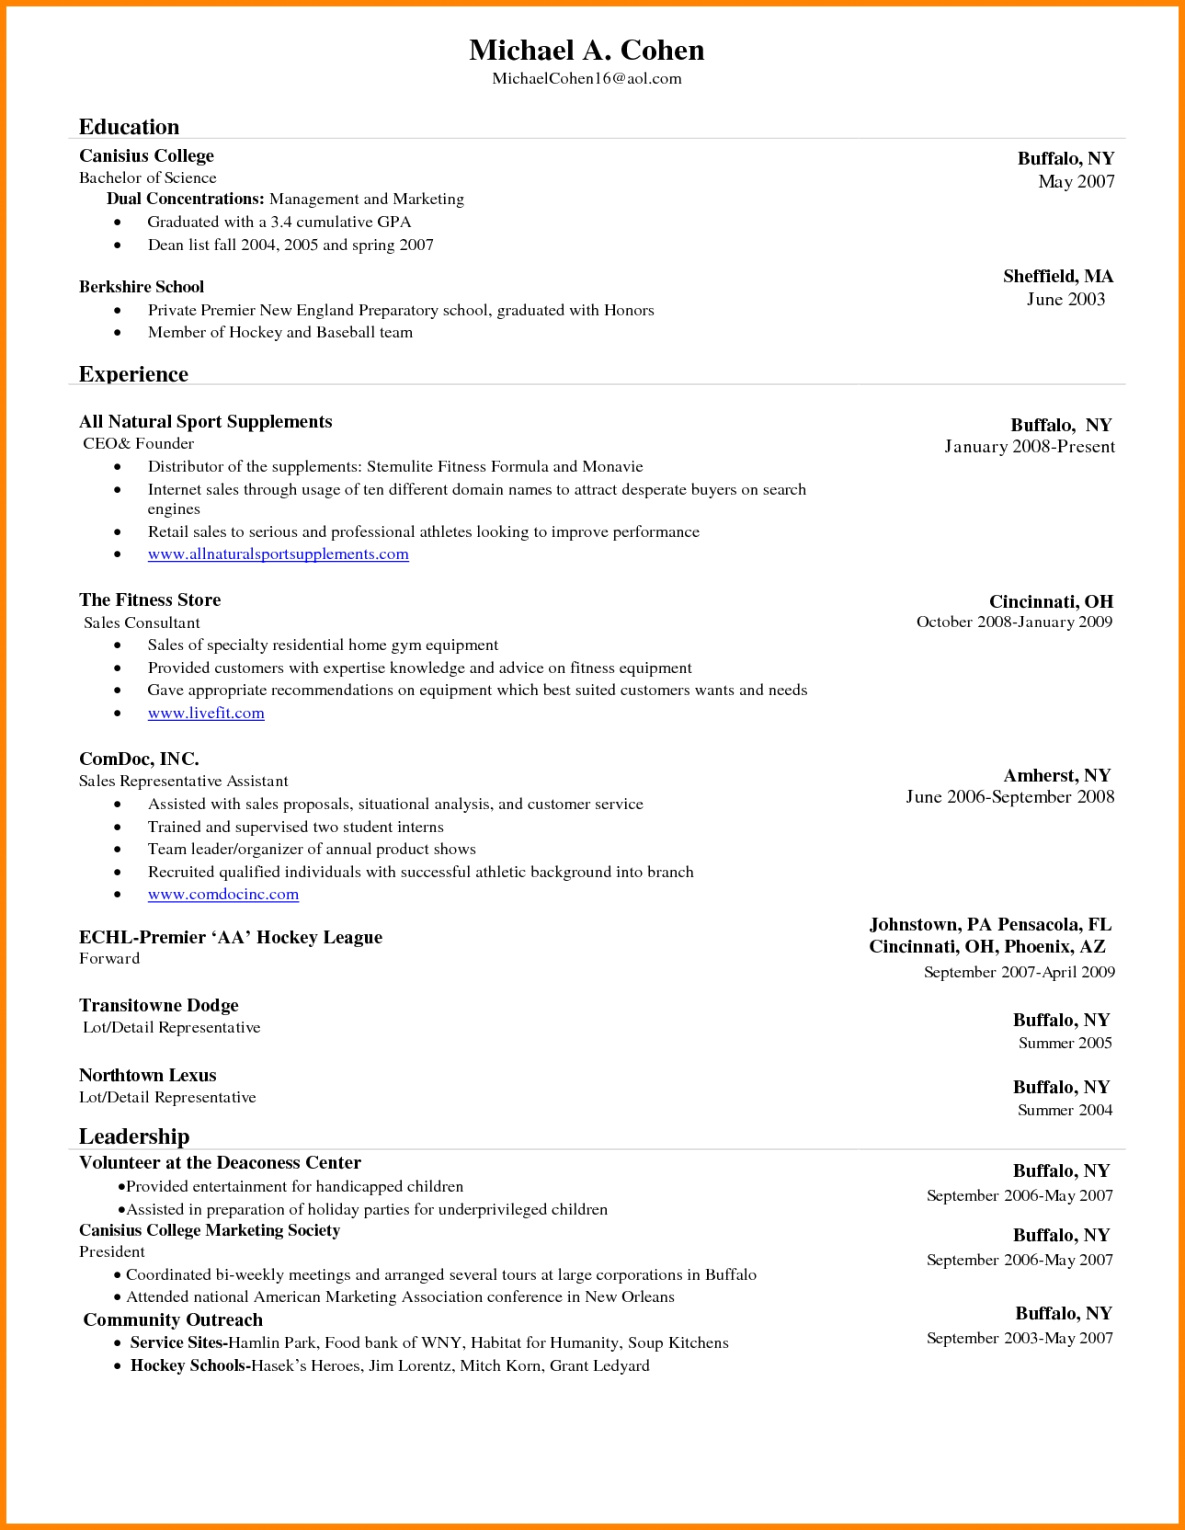 Resume Templates Microsoft Word Resume Template Microsoft Word 2017 Learnhowtoloseweight Net Free Resume Templates Microsoft Word 2007 resume templates microsoft word|wikiresume.com